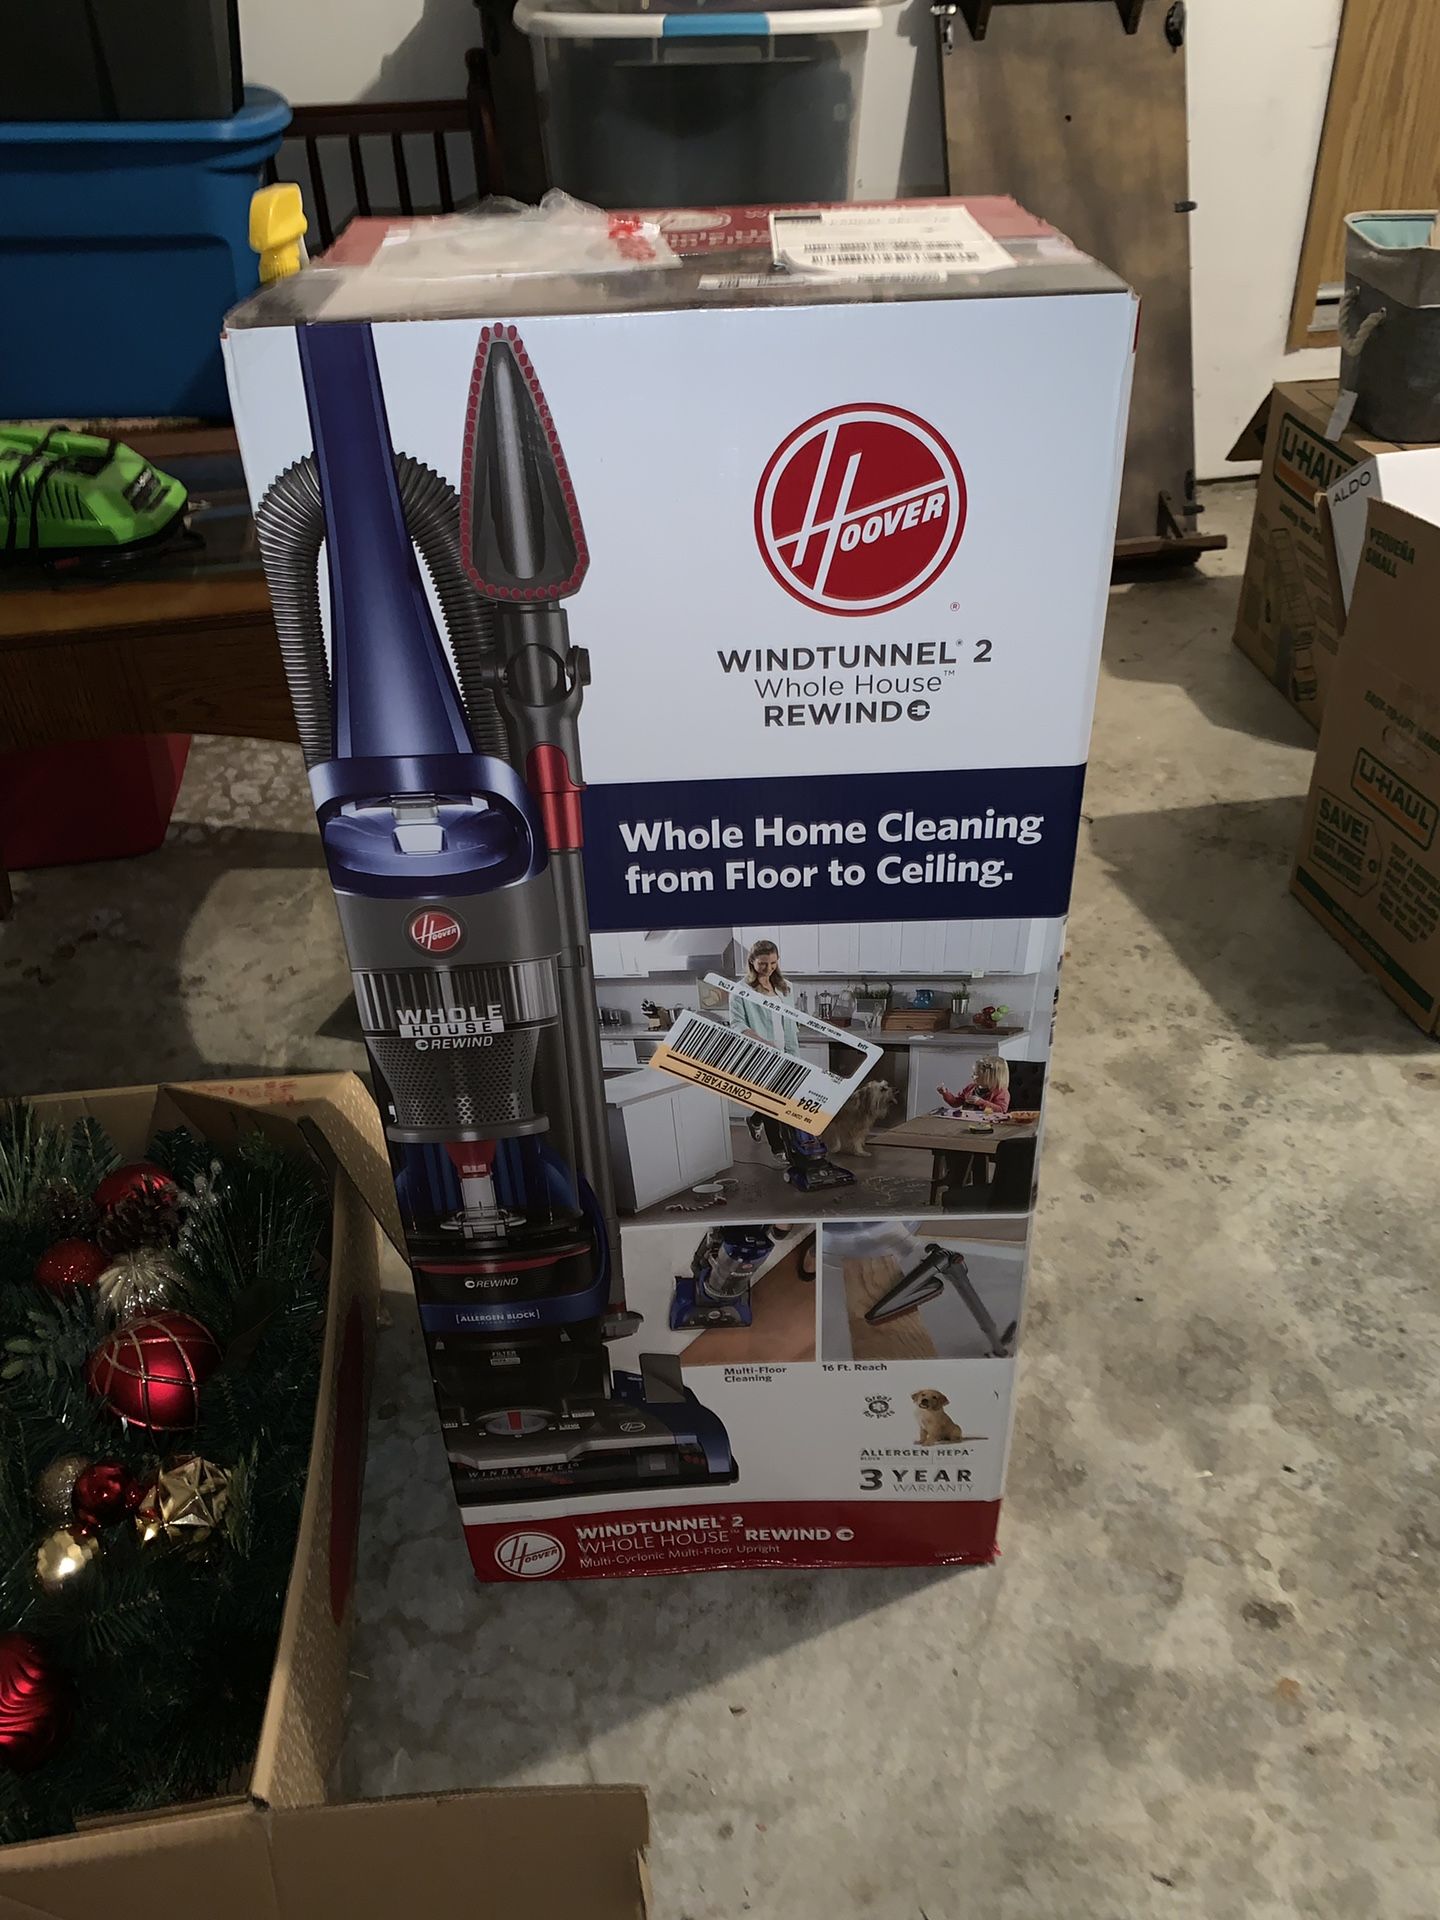 Brand New Hoover Vacuum